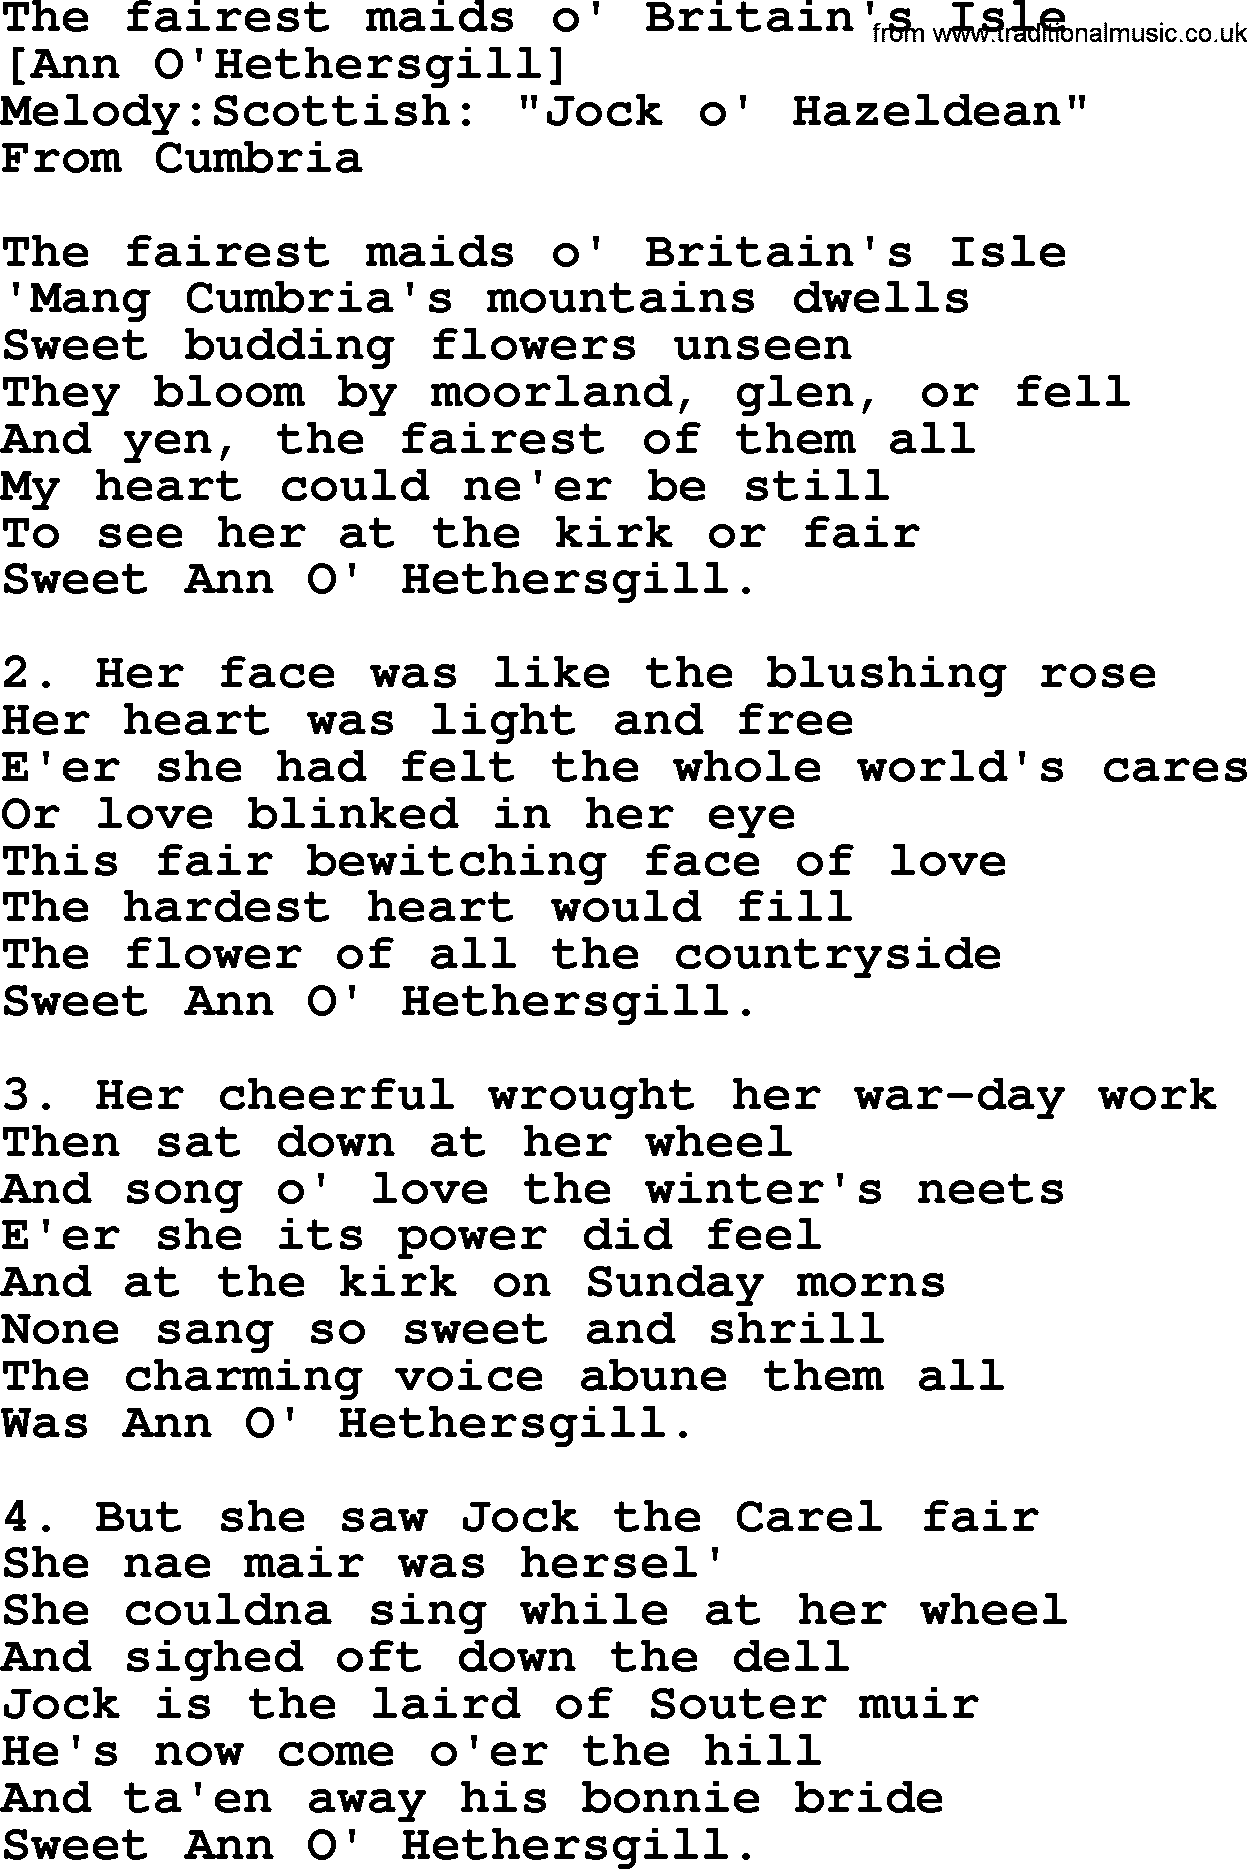 Old English Song: The Fairest Maids O' Britain's Isle lyrics